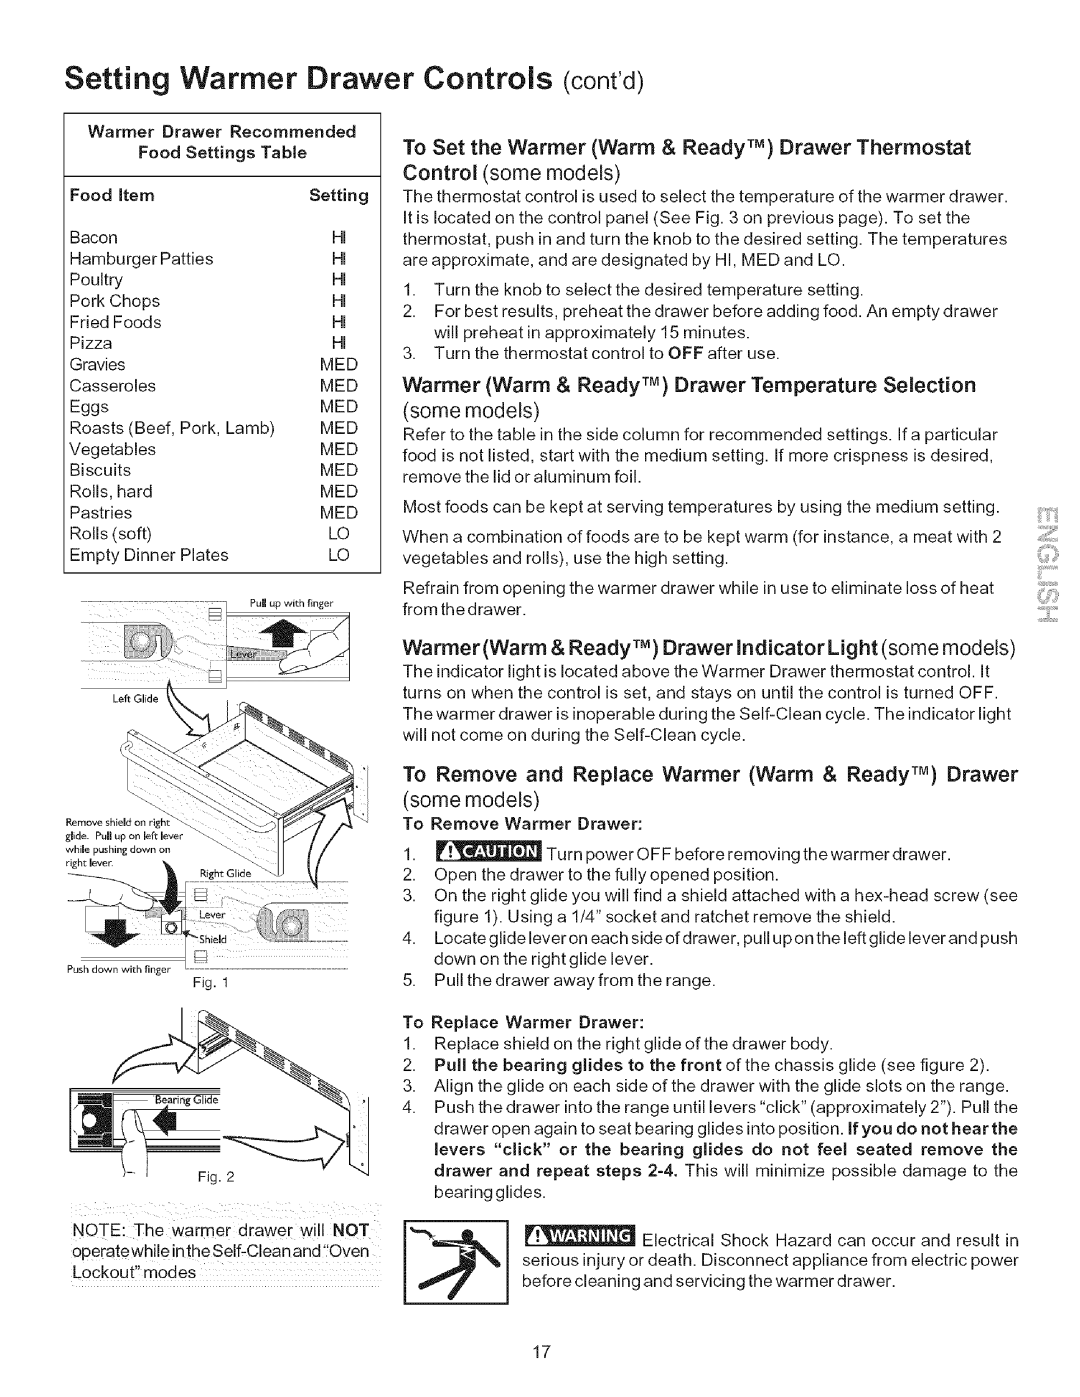 Kenmore 790.9403, 790.9402 manual Setting Warmer Drawer Controls contd 